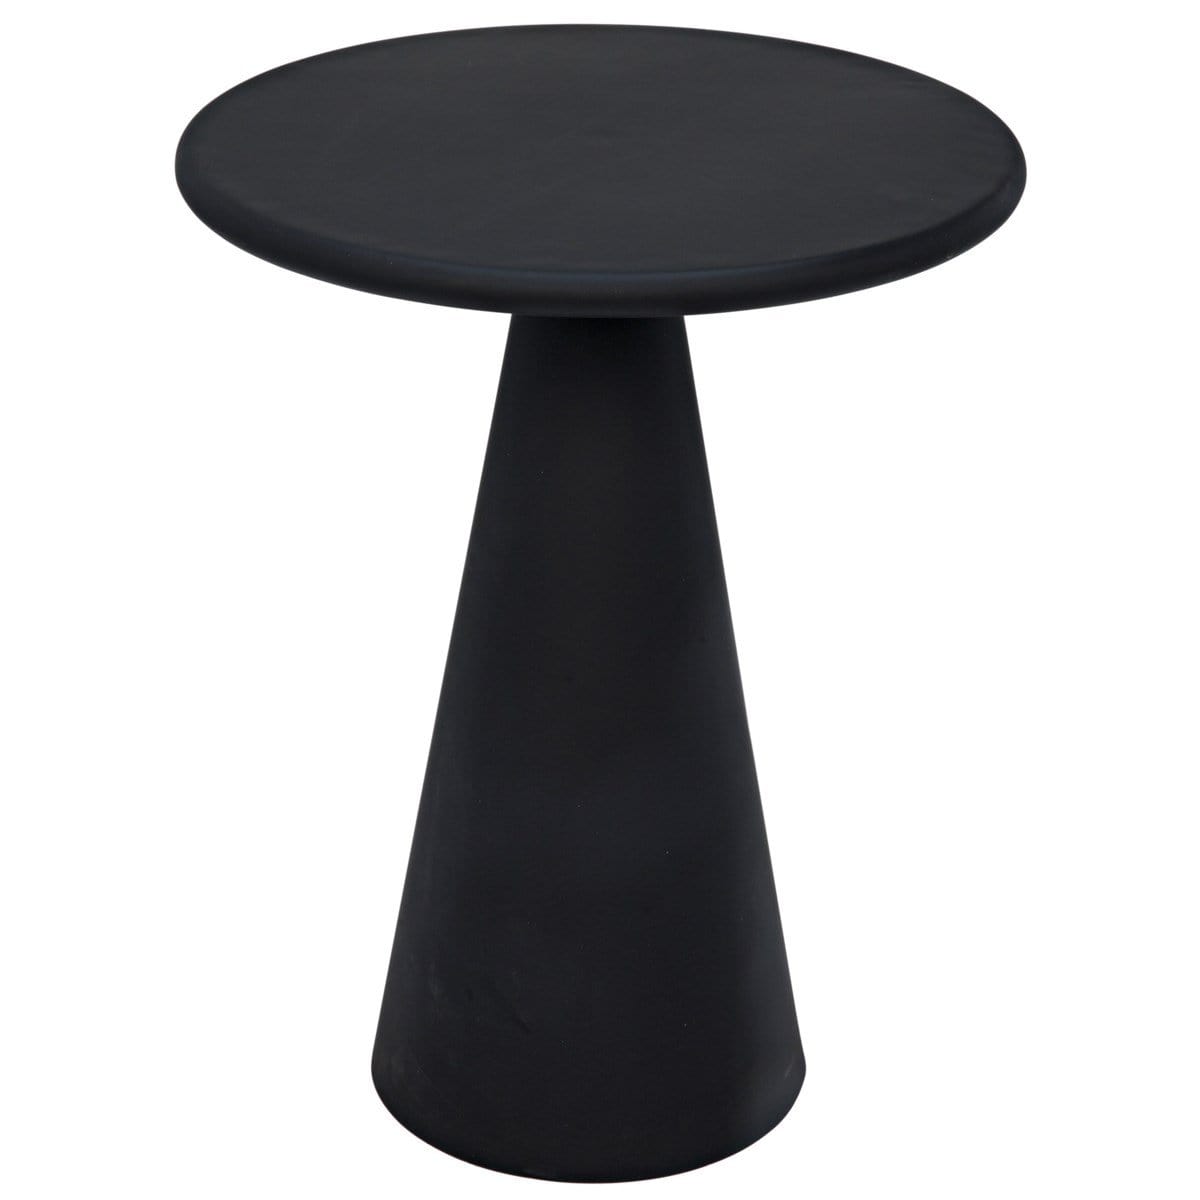 Noir Idiom Side Table Furniture noir-GTAB868 00842449123090